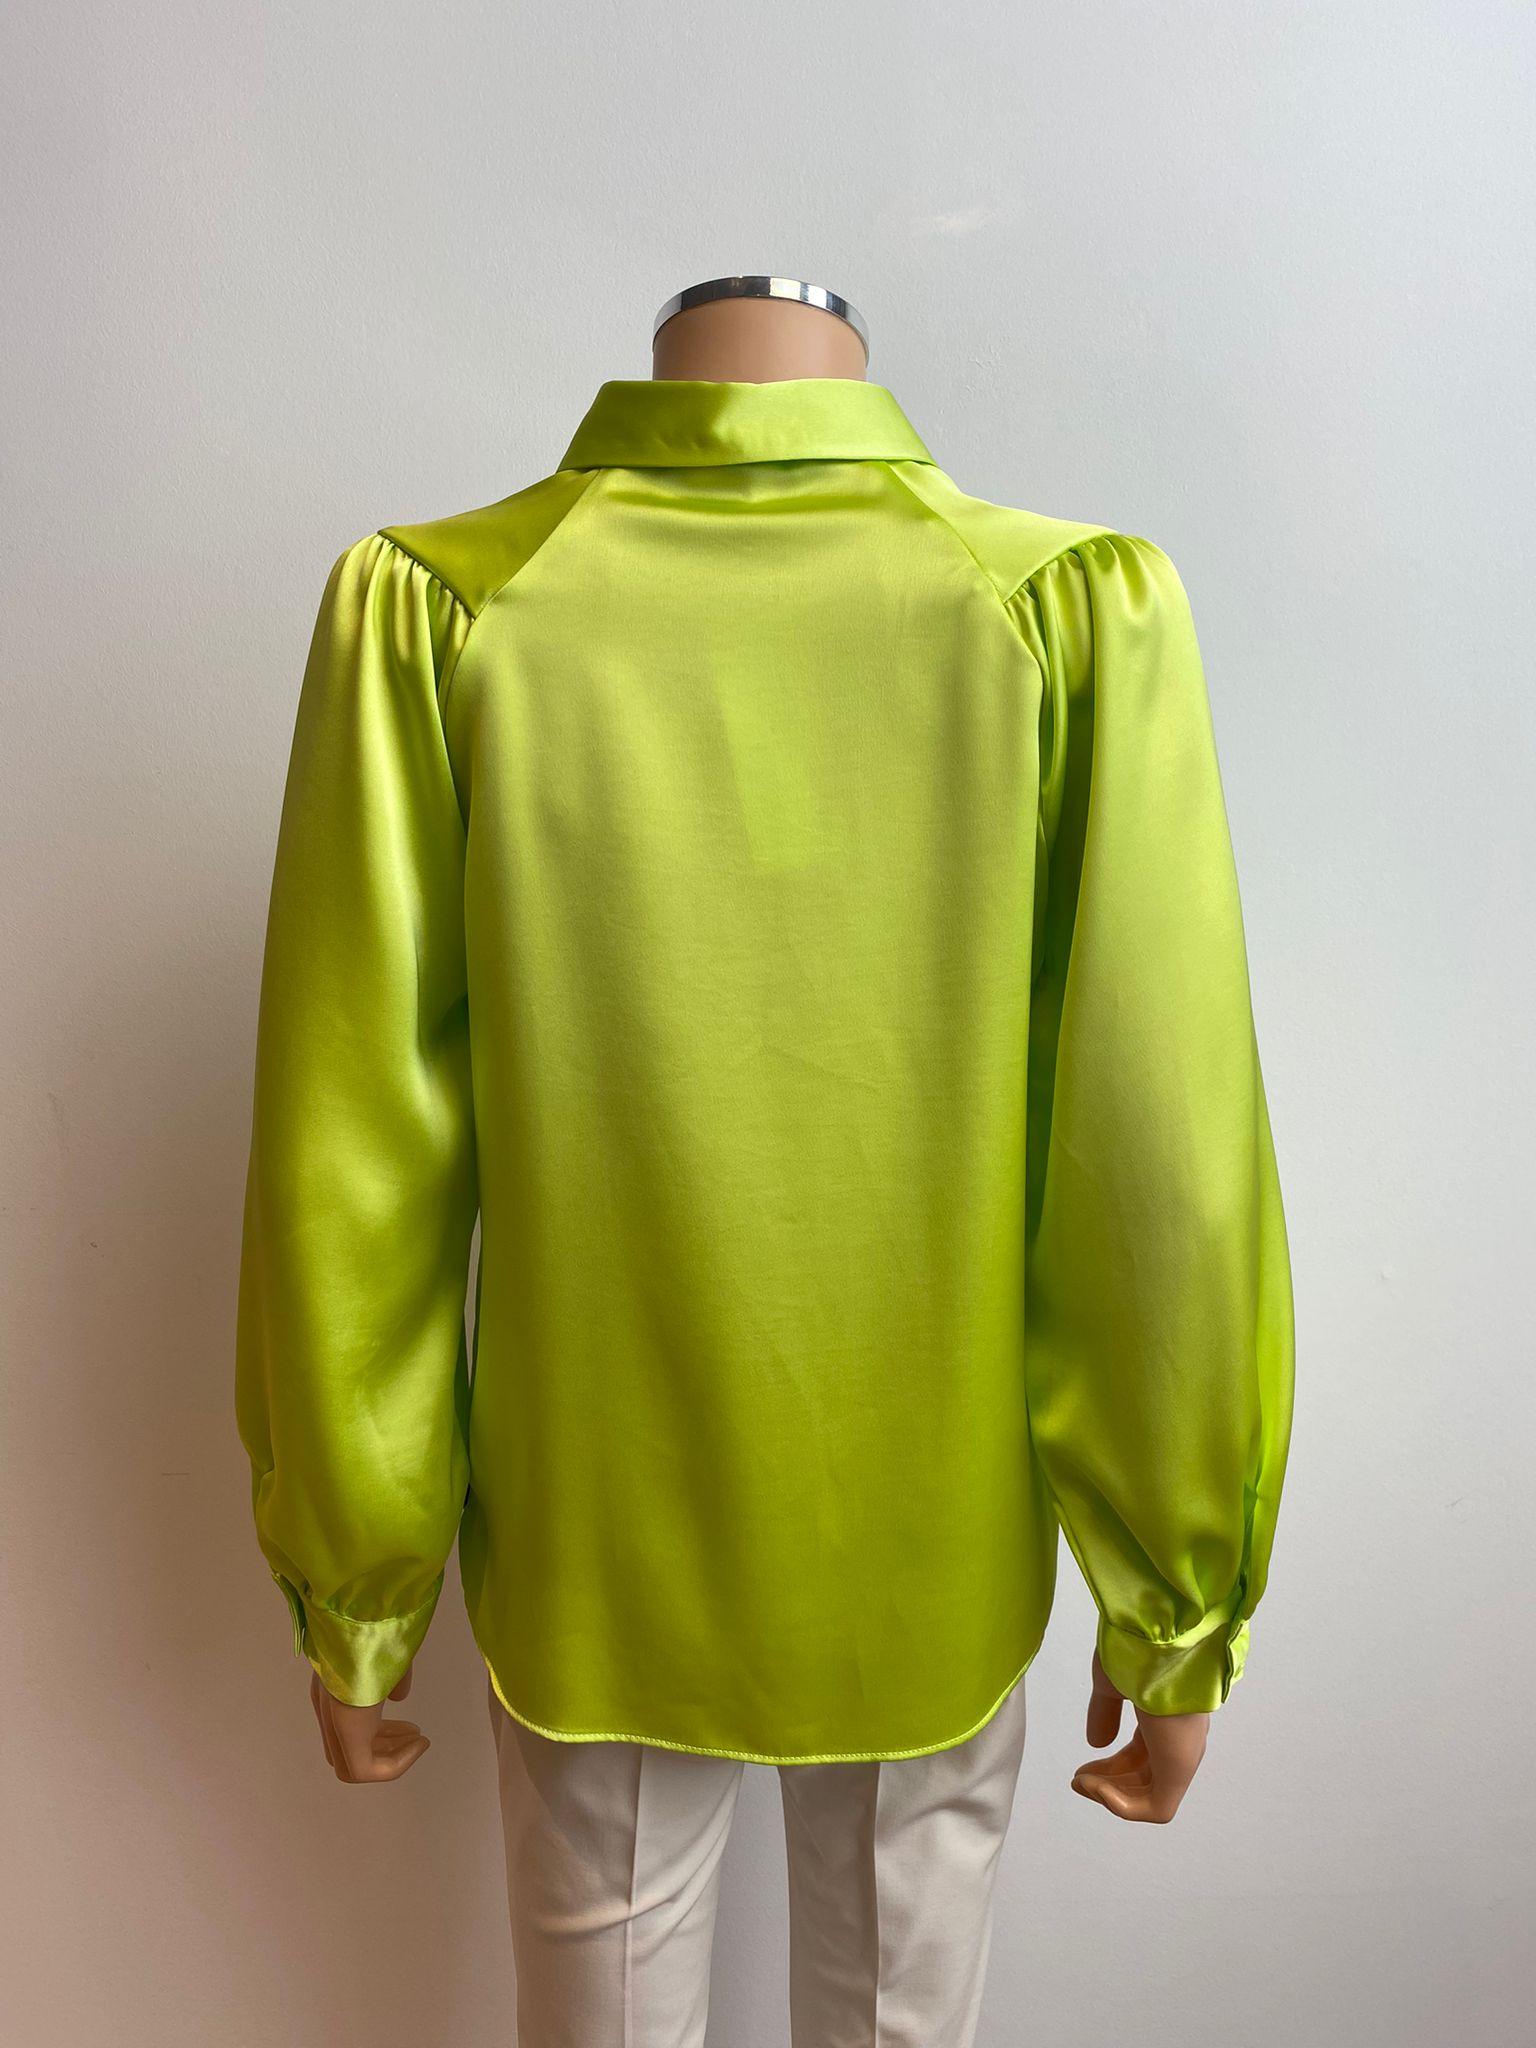 Bloes Anijsgroen Atmos Fashion ( 9257 Lilos Anise ) - Delaere Womenswear